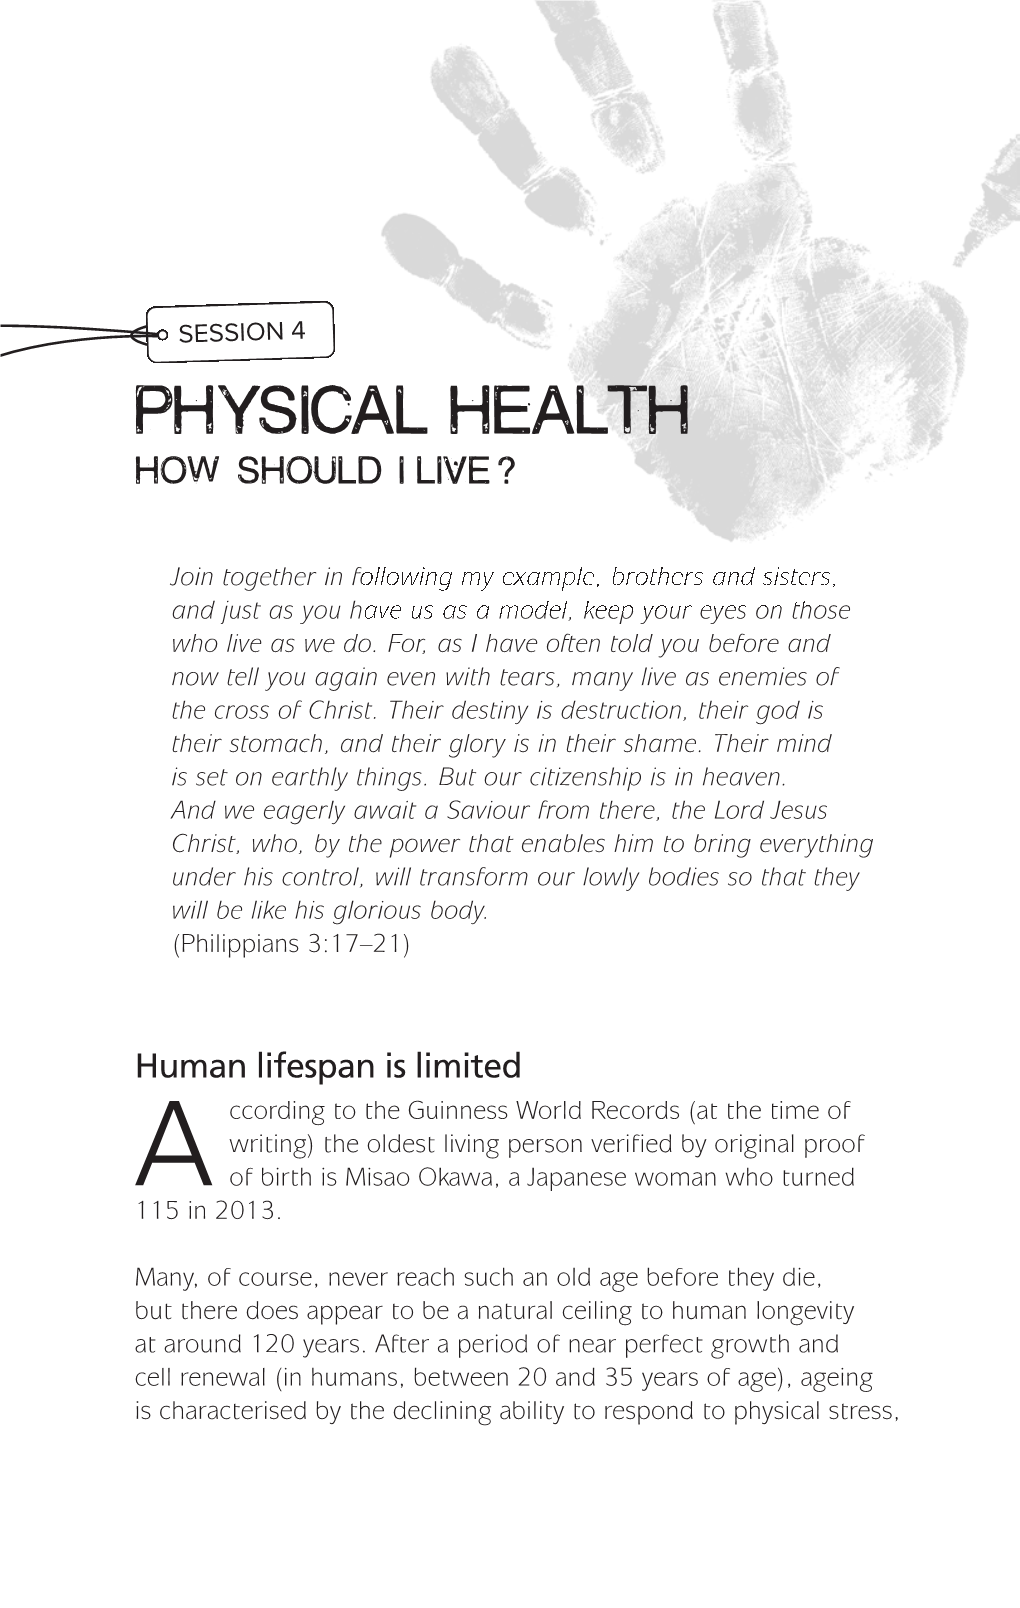 Physical Health: How Should I Live?